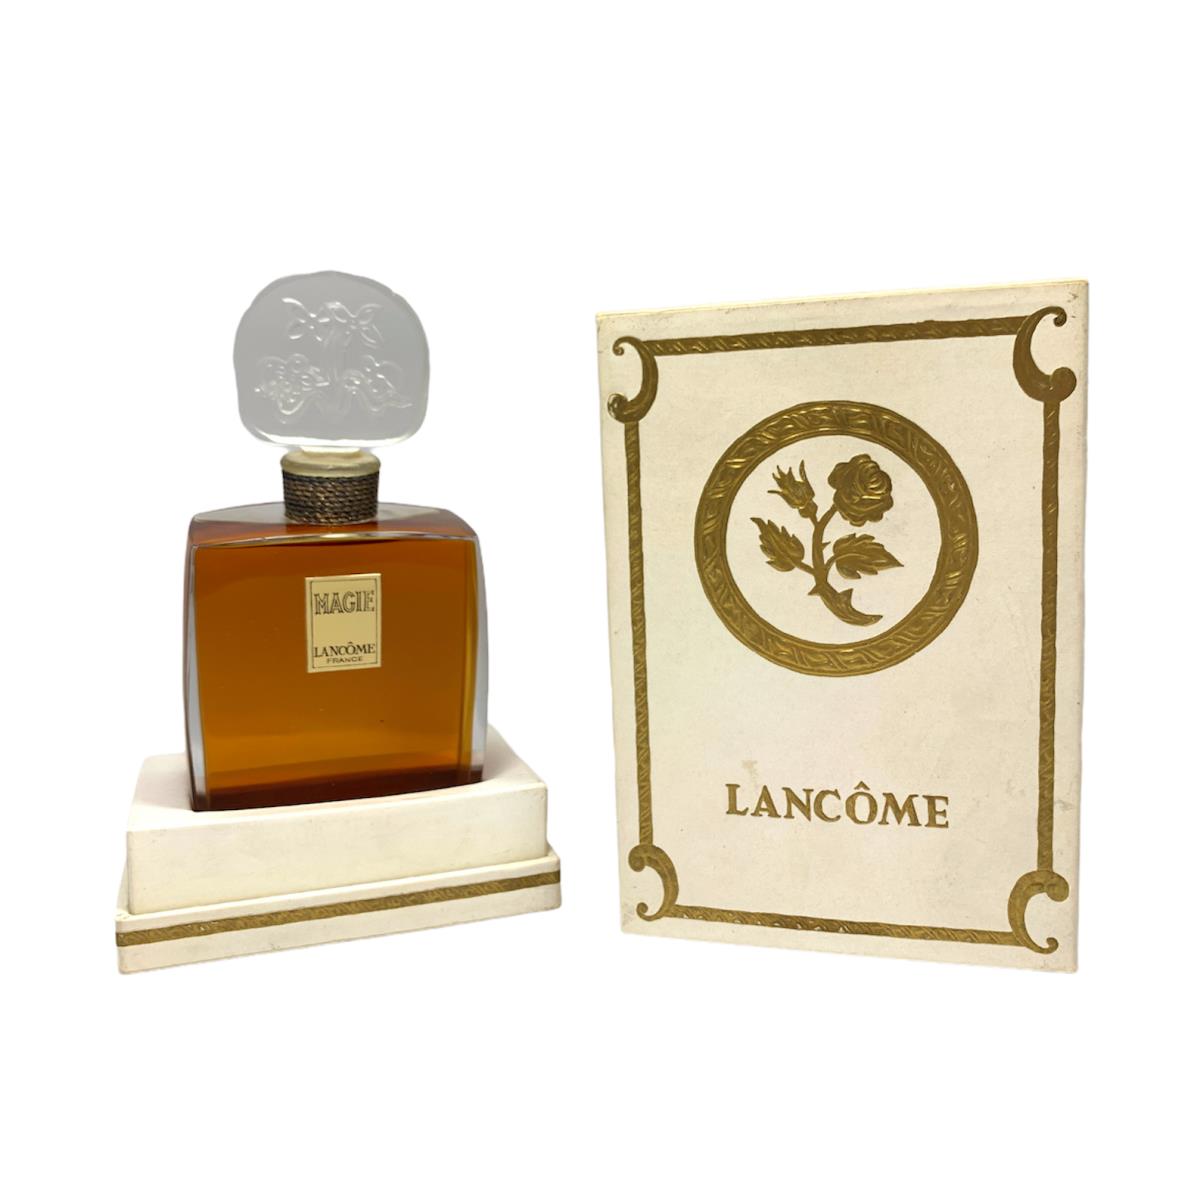 Lancome Magie Vintage Perfume 2.0oz 60ml 3 Inch Tall